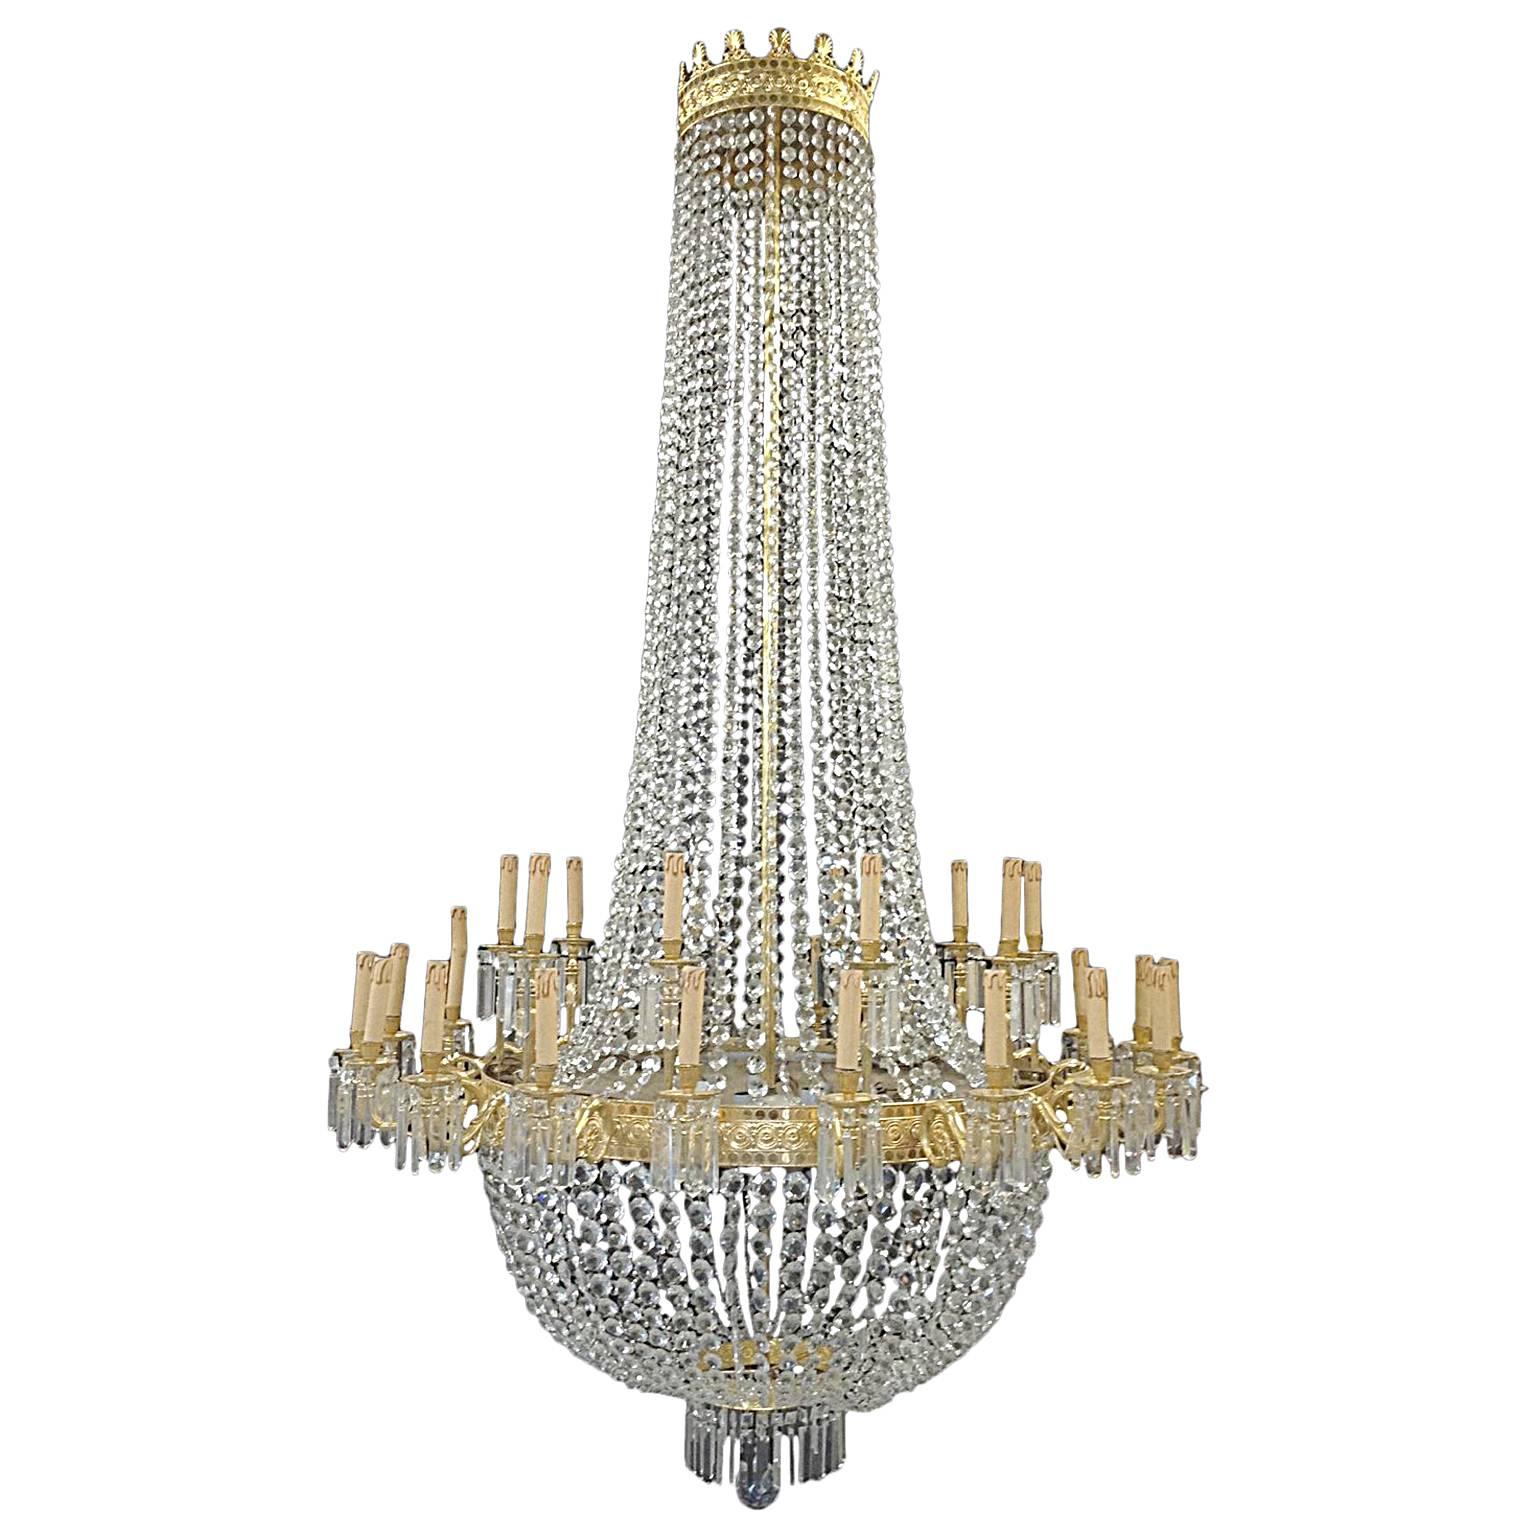 Imposing 10 Foot High Empire Style 30-Light Gilt Bronze Basket Chandelier